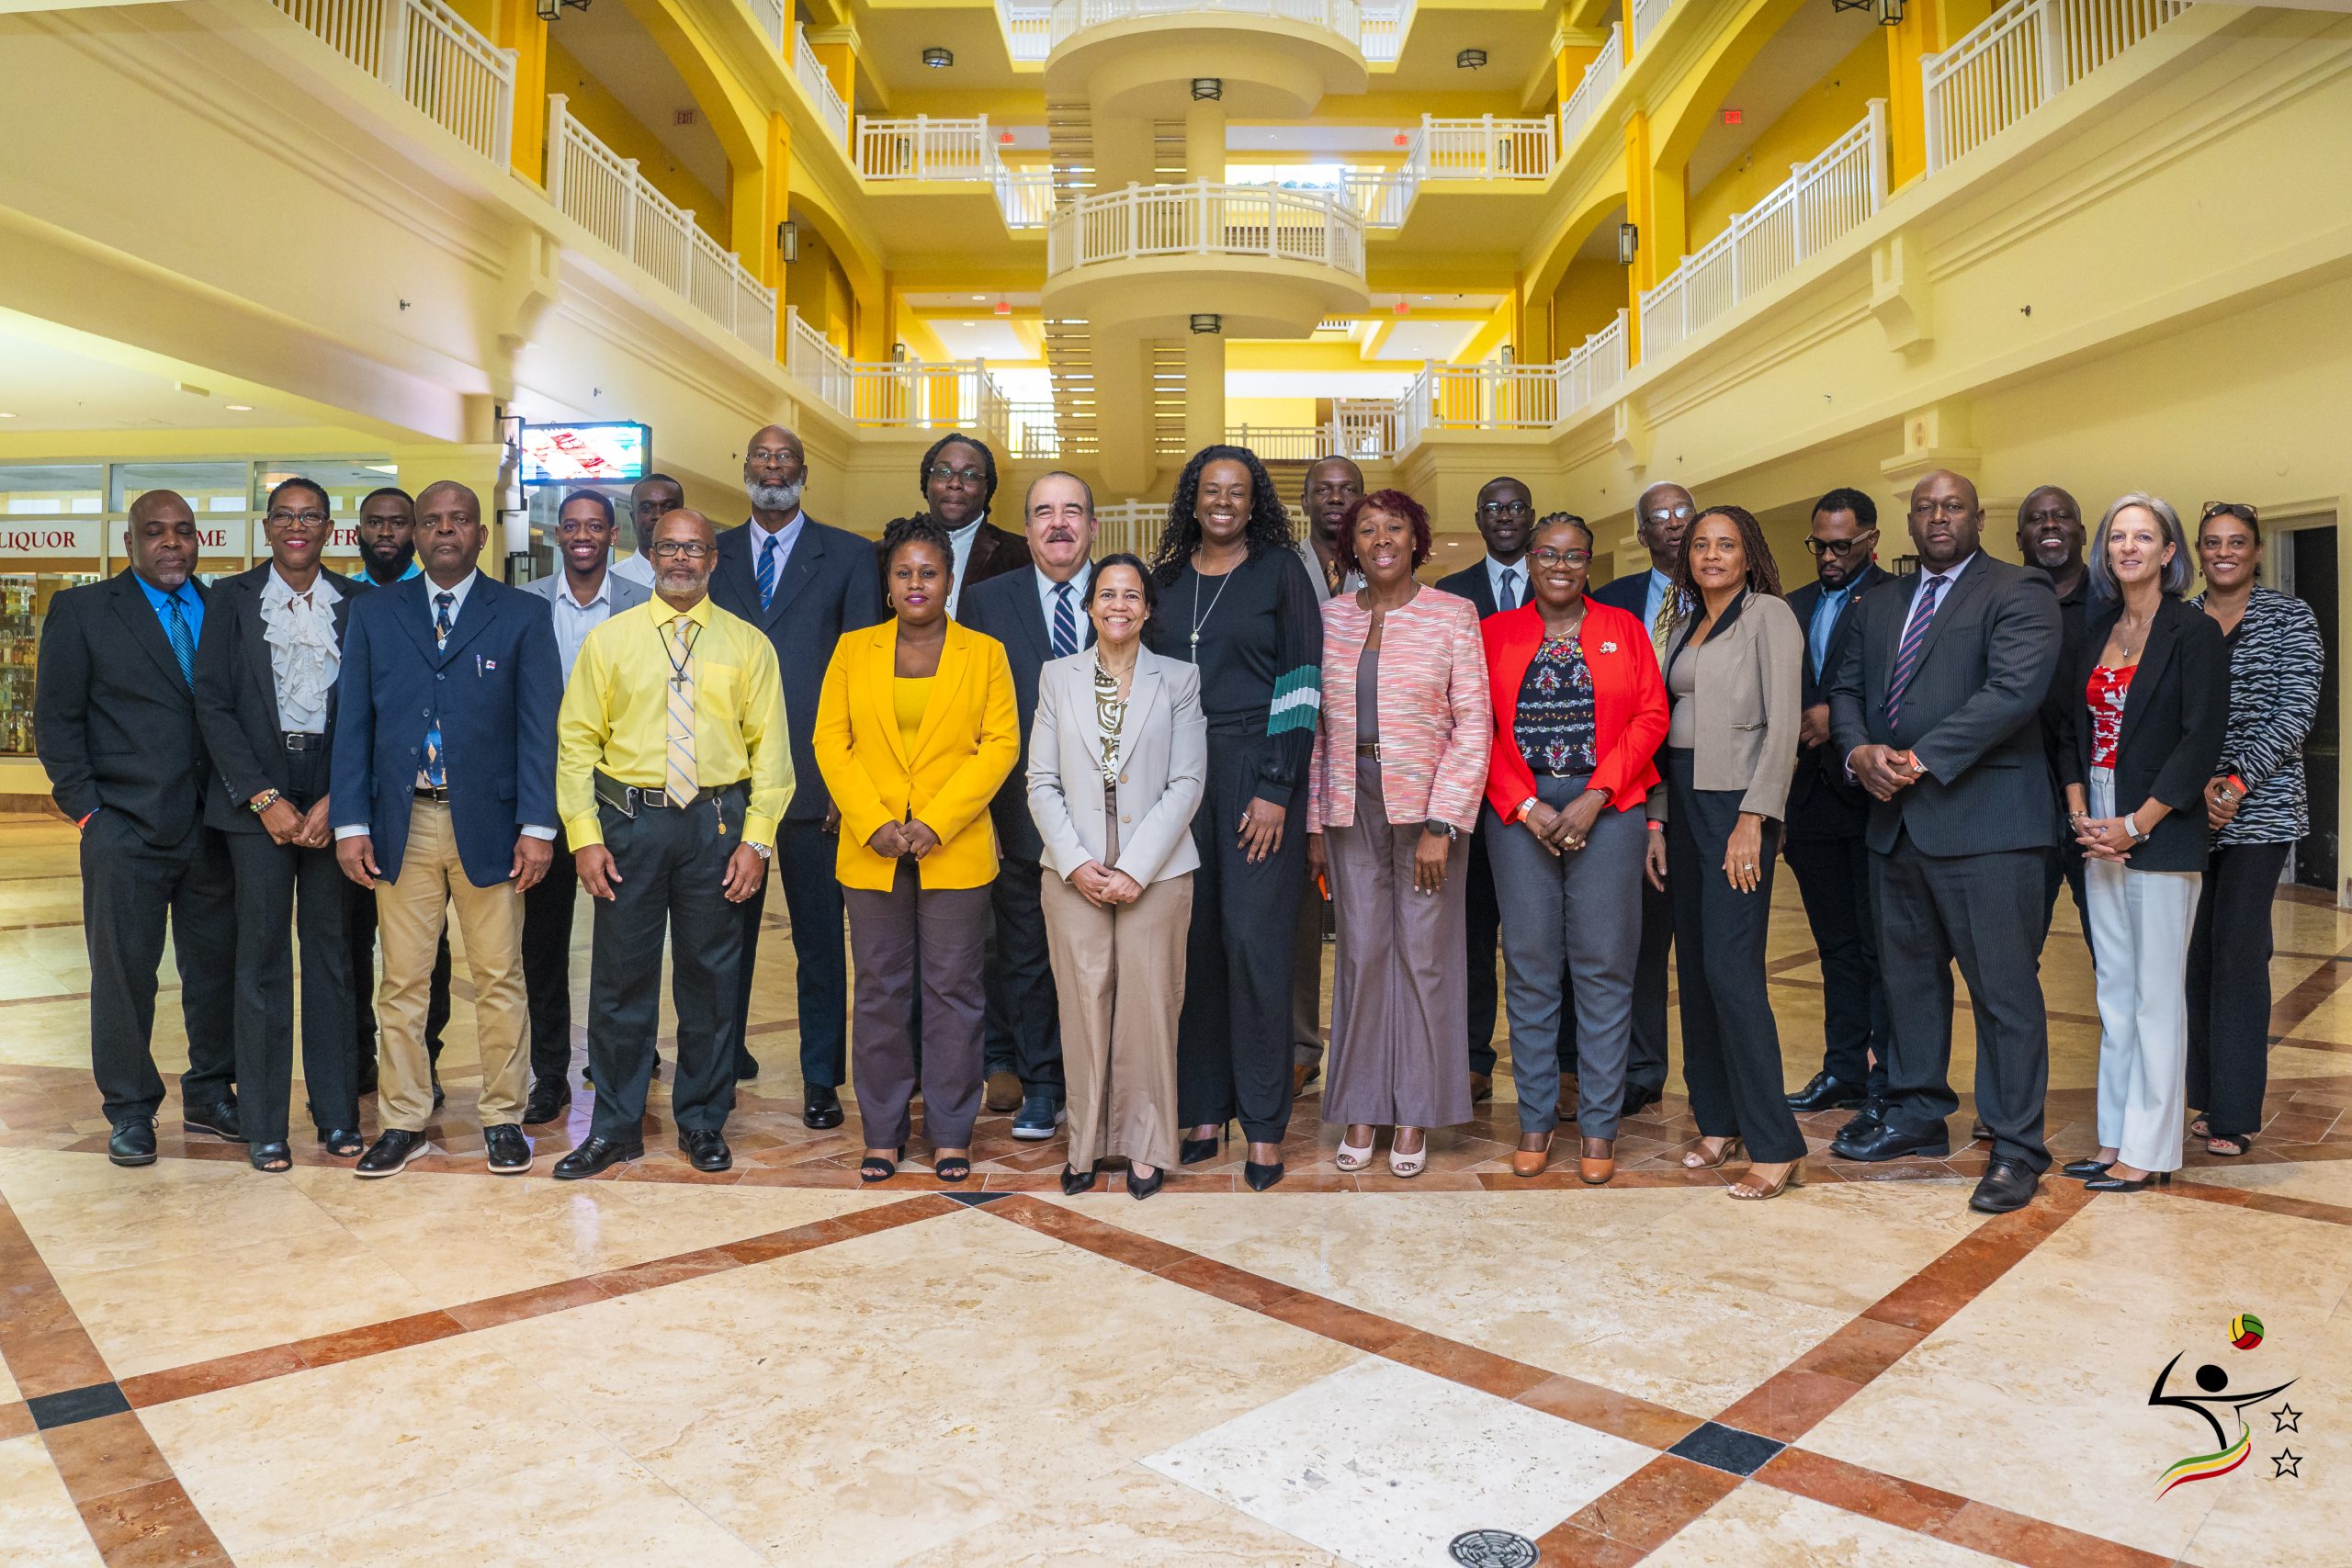 St. Kitts Welcomes the 2023 ECVA Congress